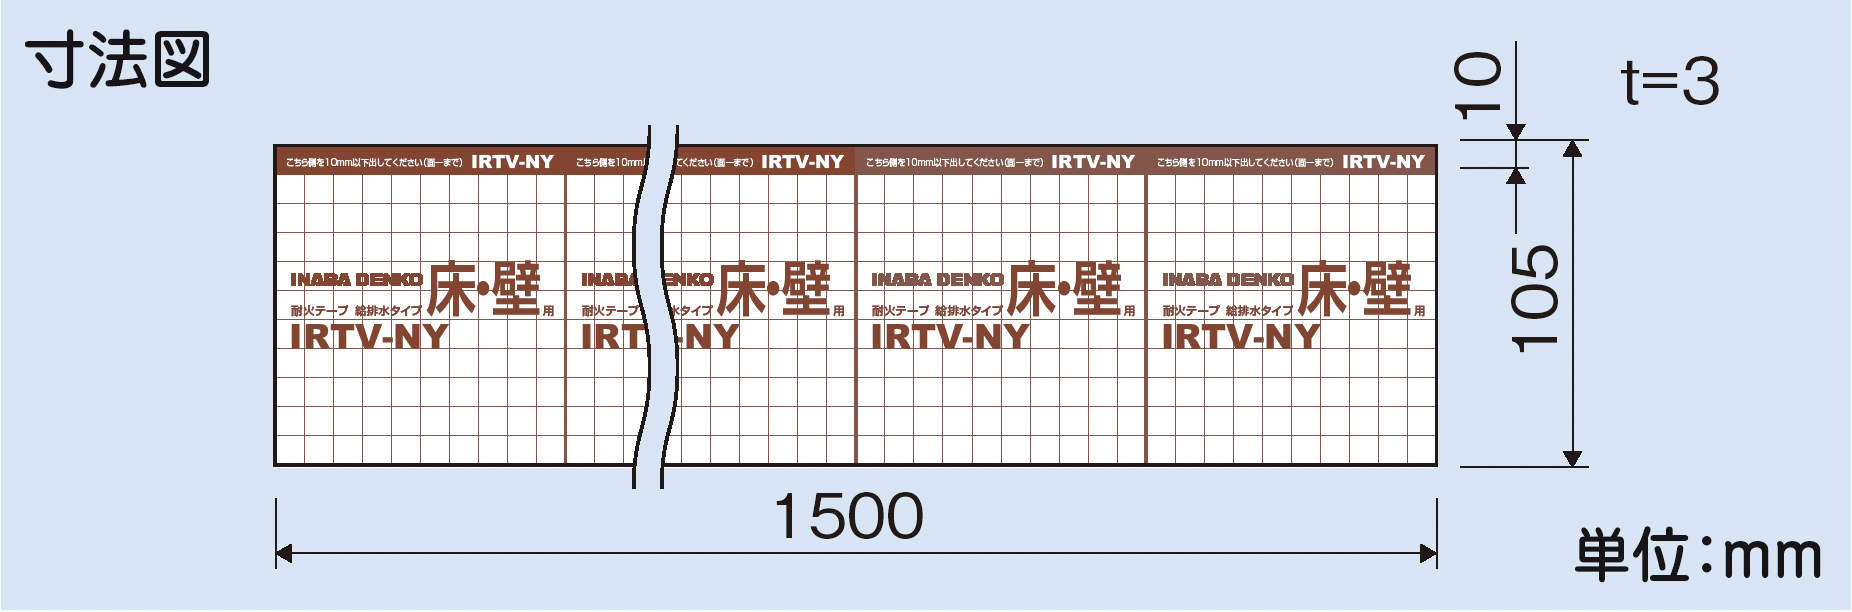 IRTV-N】耐火テープ 給排水タイプ | 製品情報 | 因幡電工 INABA DENKO